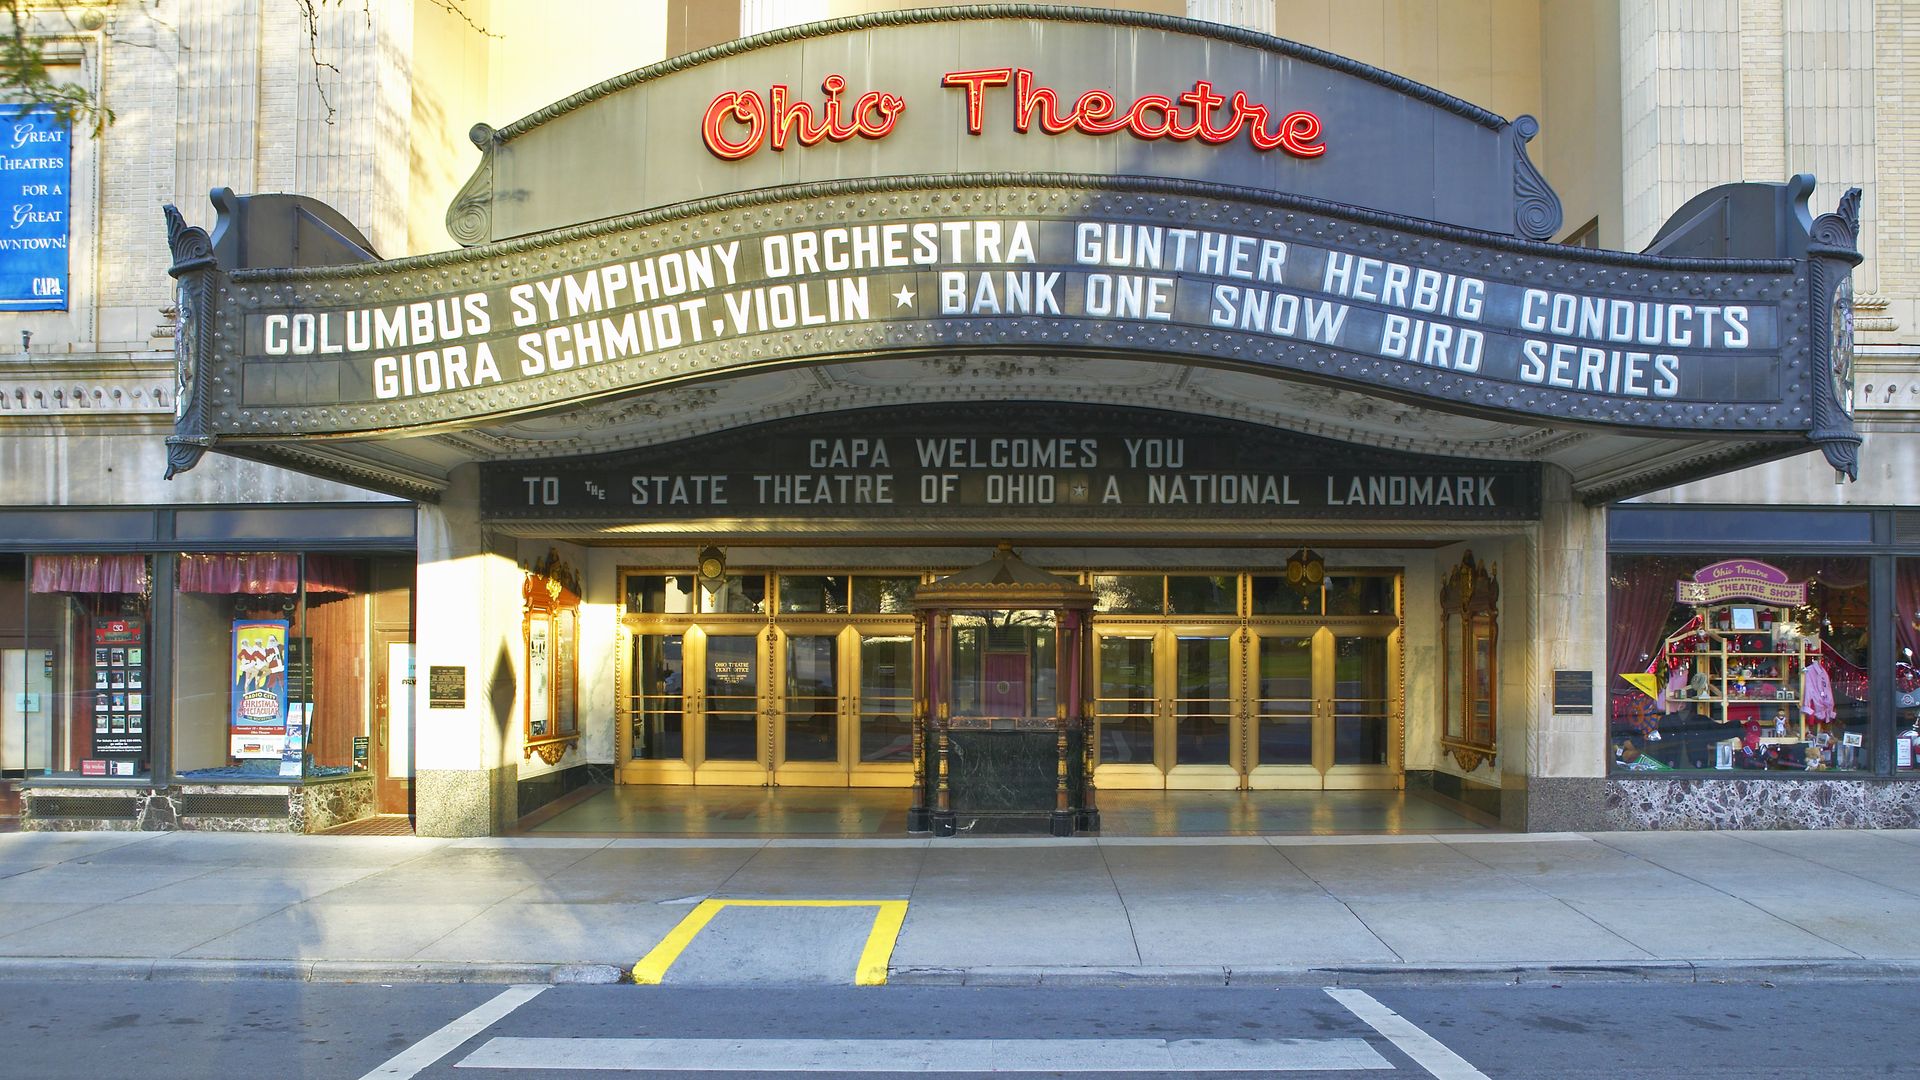 The exterior marquee of the Ohio Theatre.